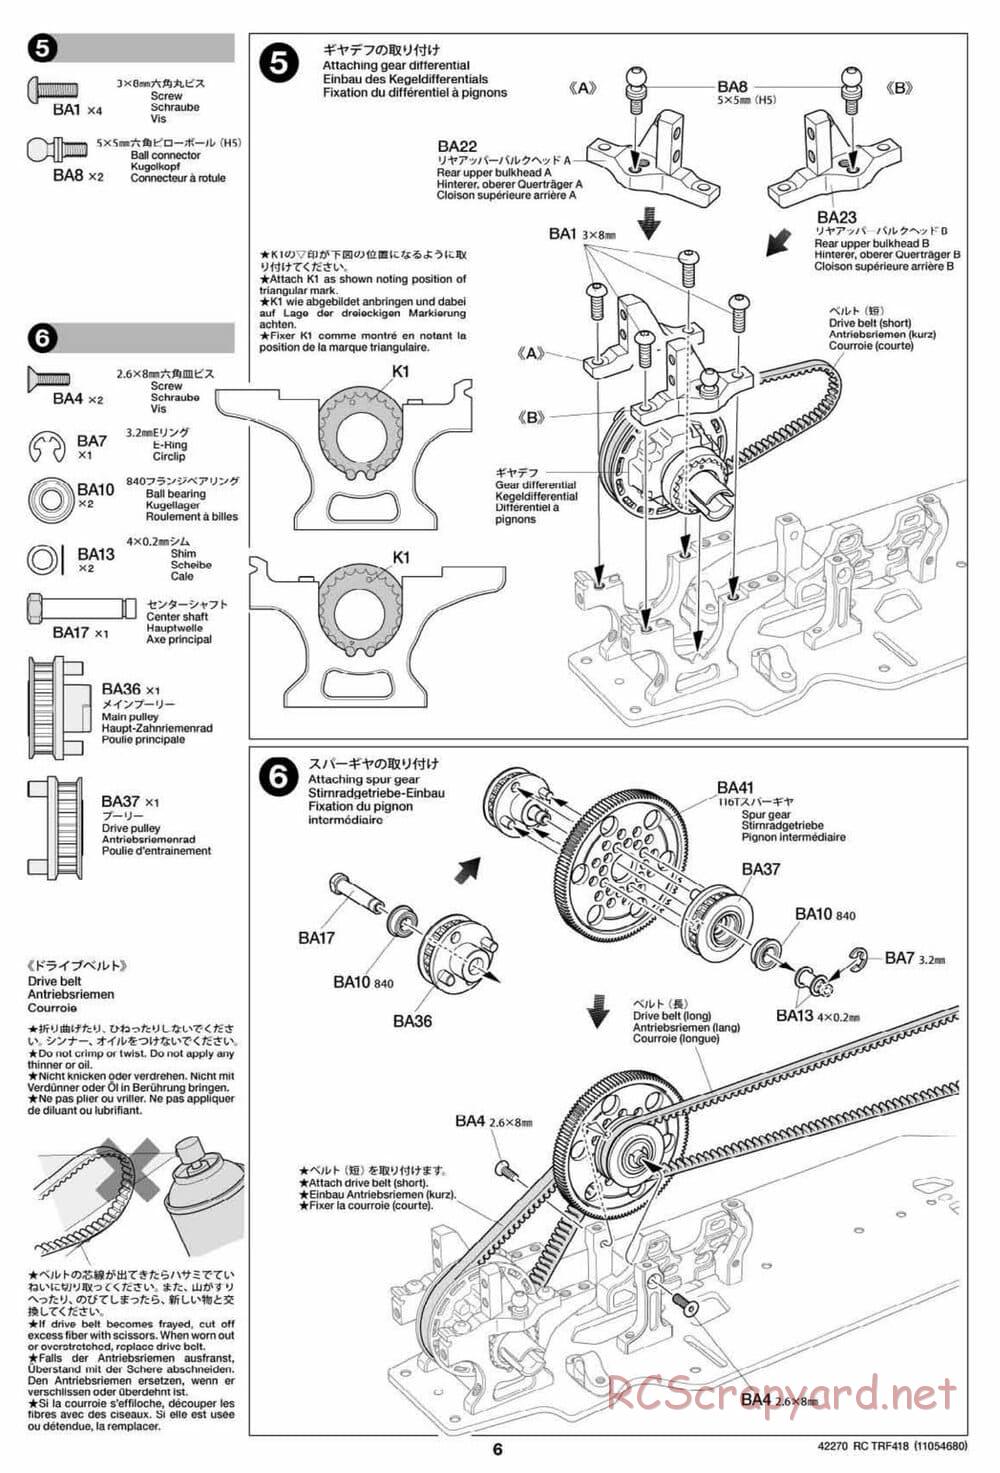 Tamiya - TRF418 Chassis - Manual - Page 6